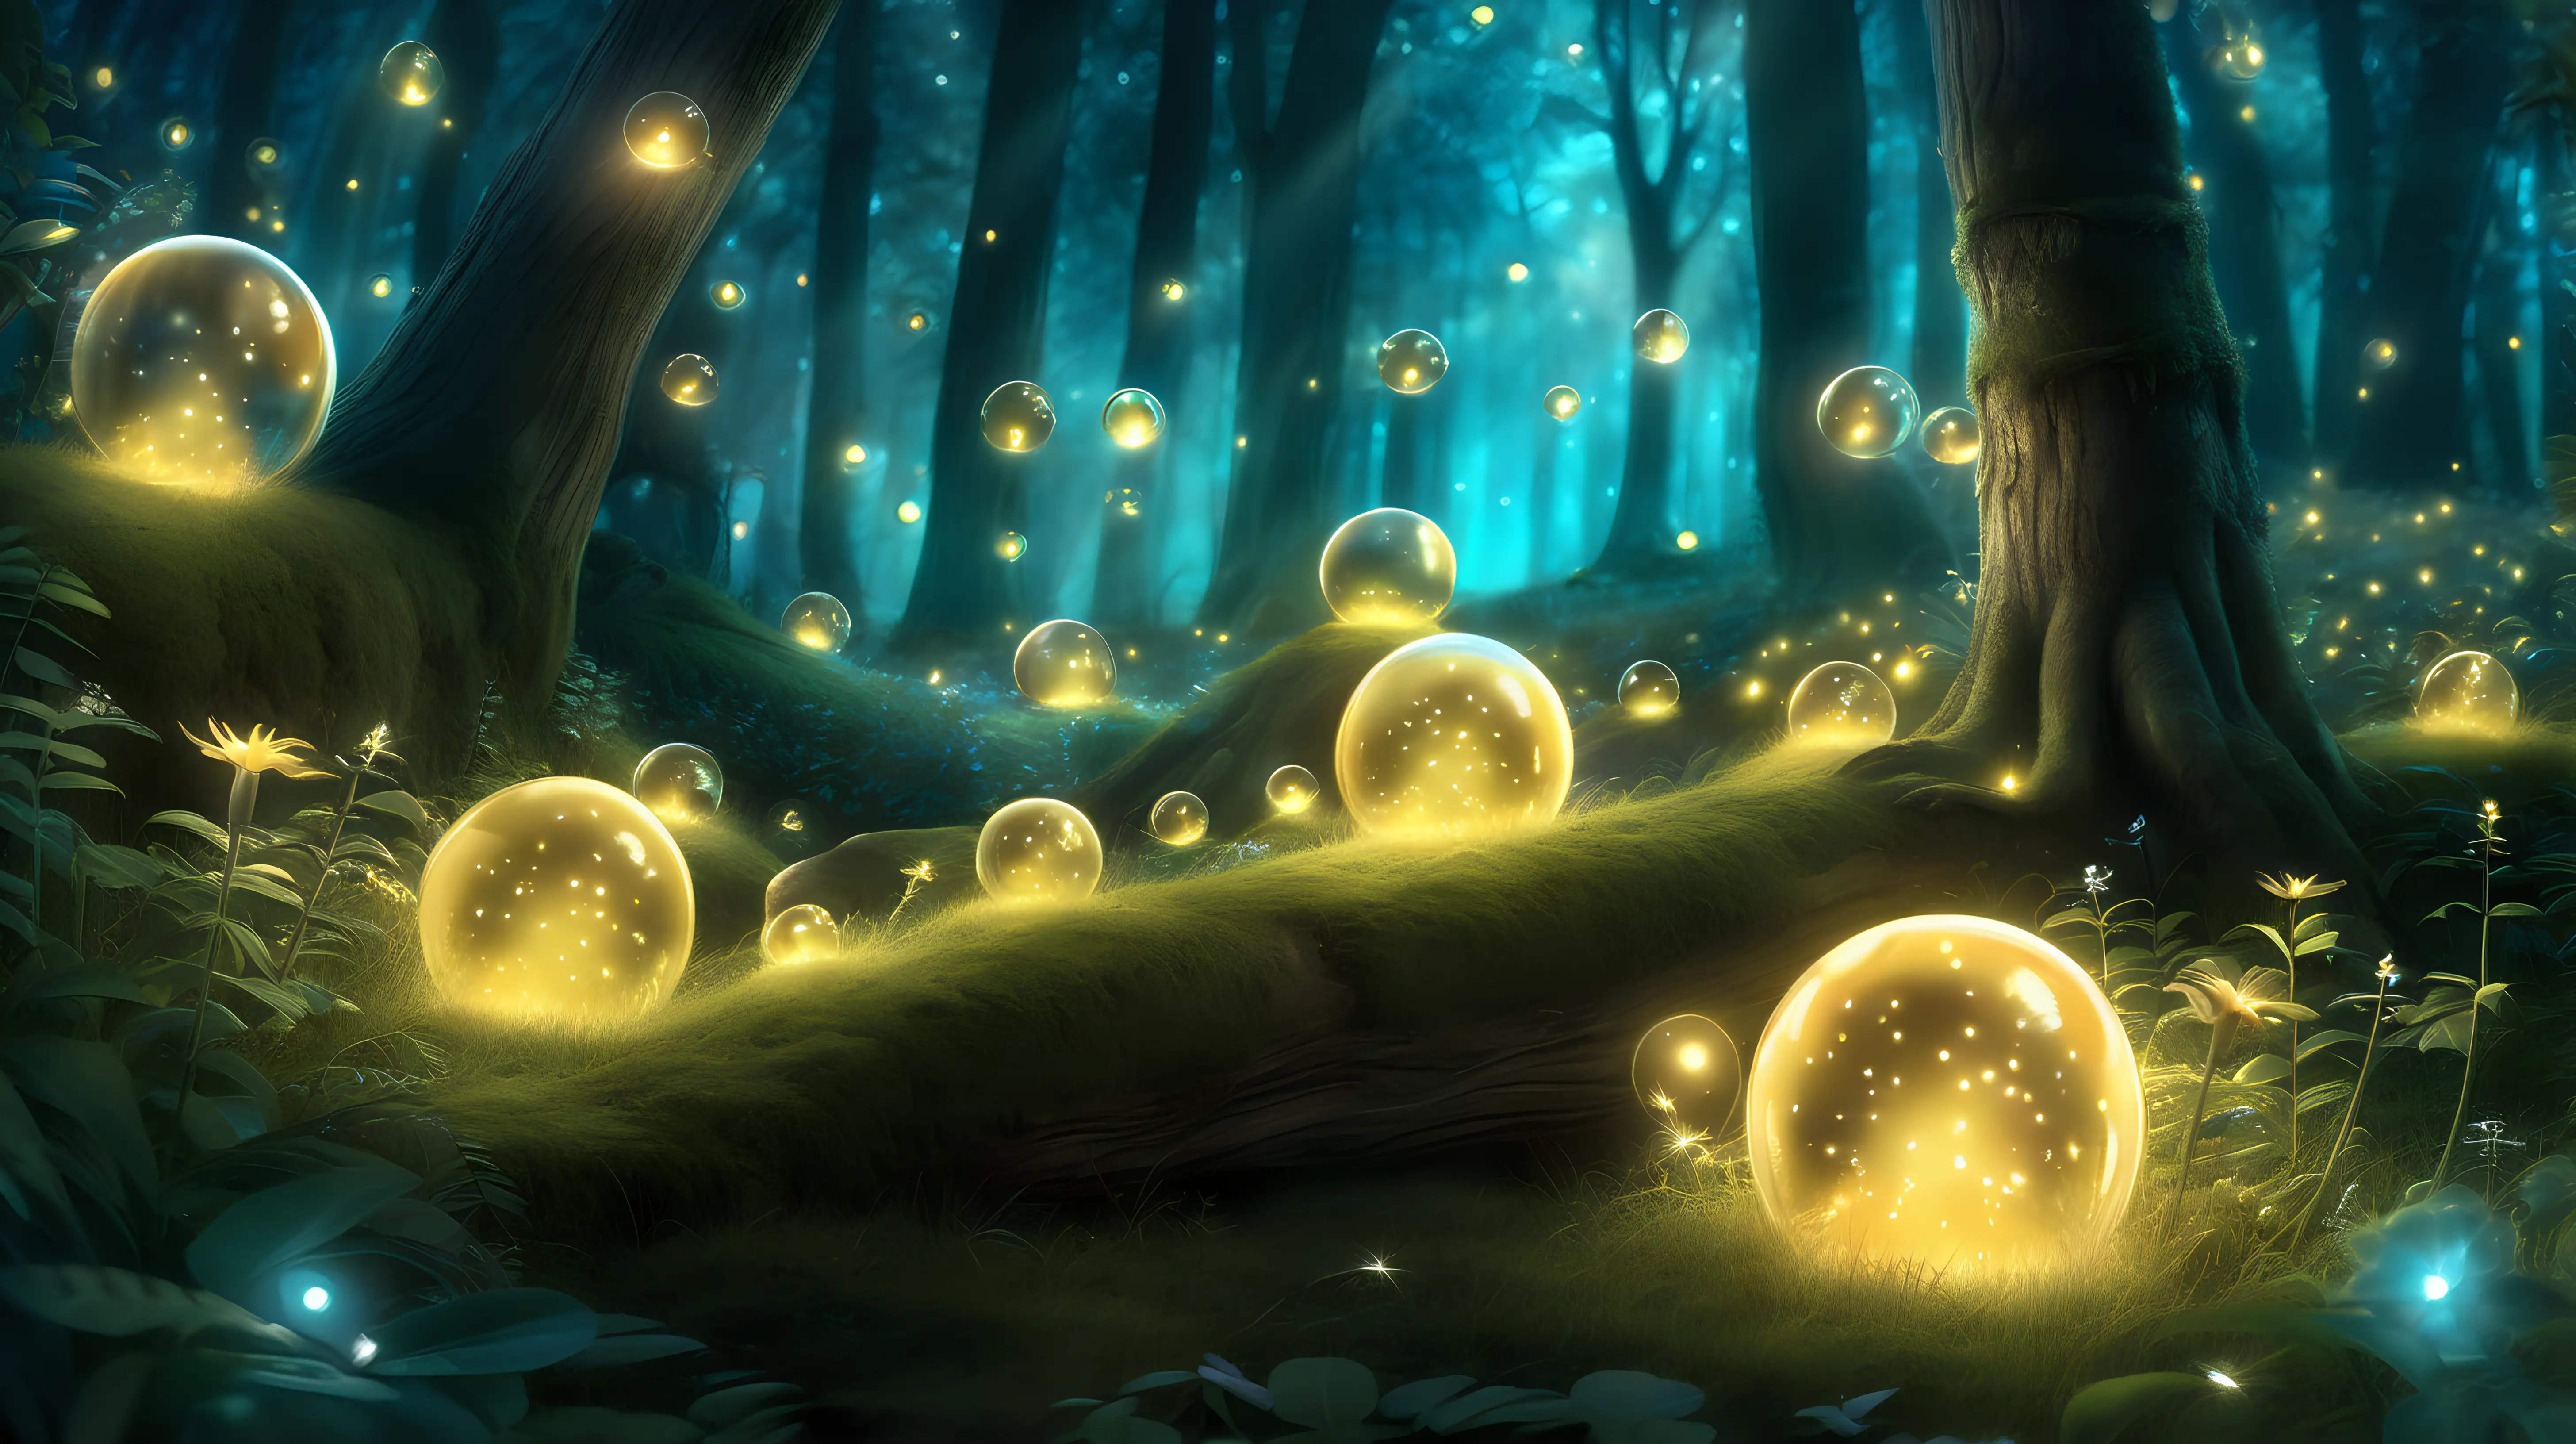 Enchanted Forest Fireflies Luminous Spheres Illuminate Magical Woods